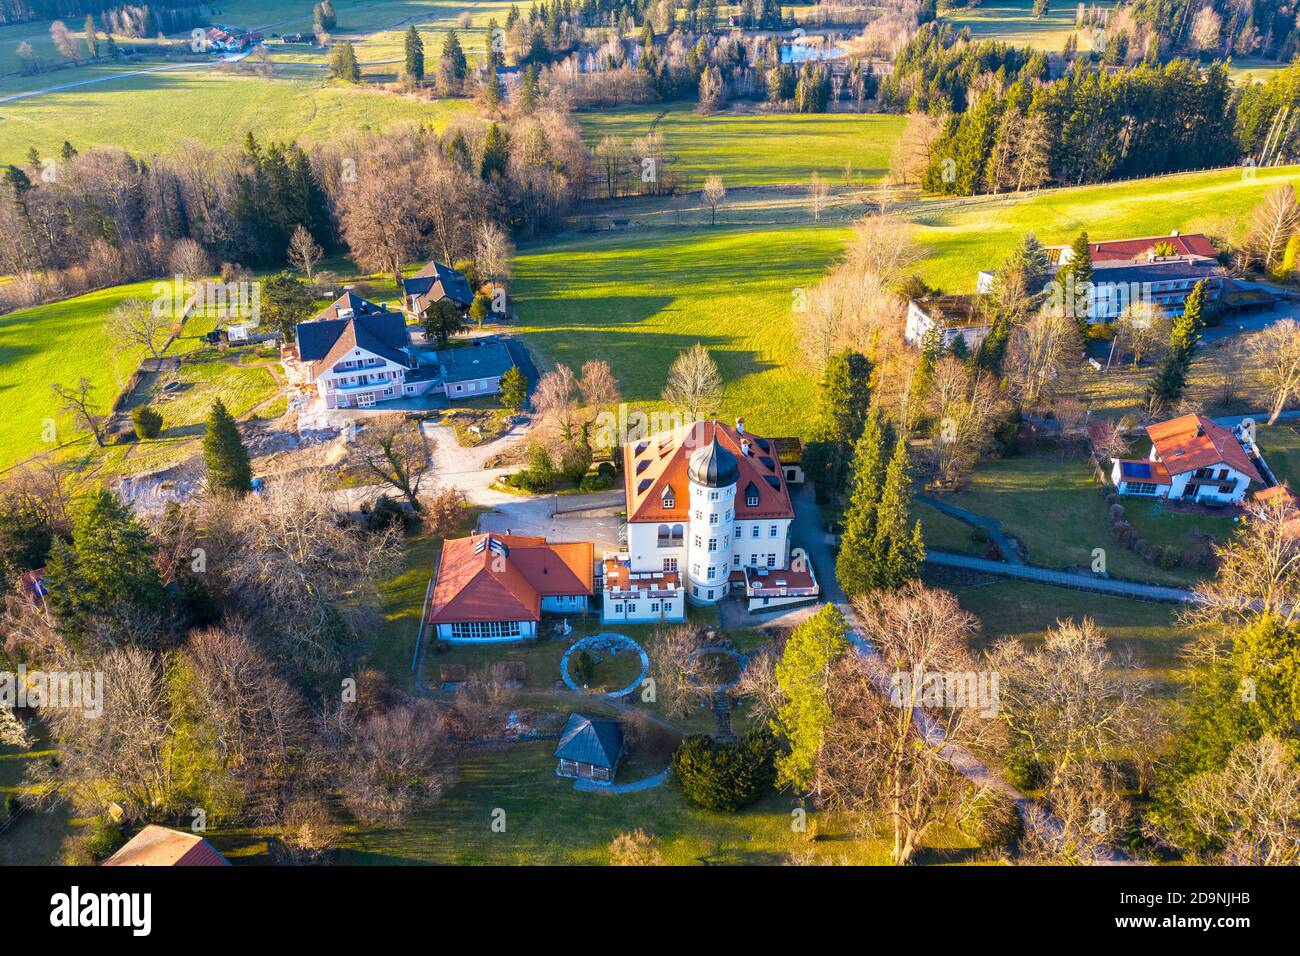 Cafe Restaurant Park Villa, Bad Heilbrunn, Tölzer Land, drone image, Upper Bavaria, Bavaria, Germany Stock Photo